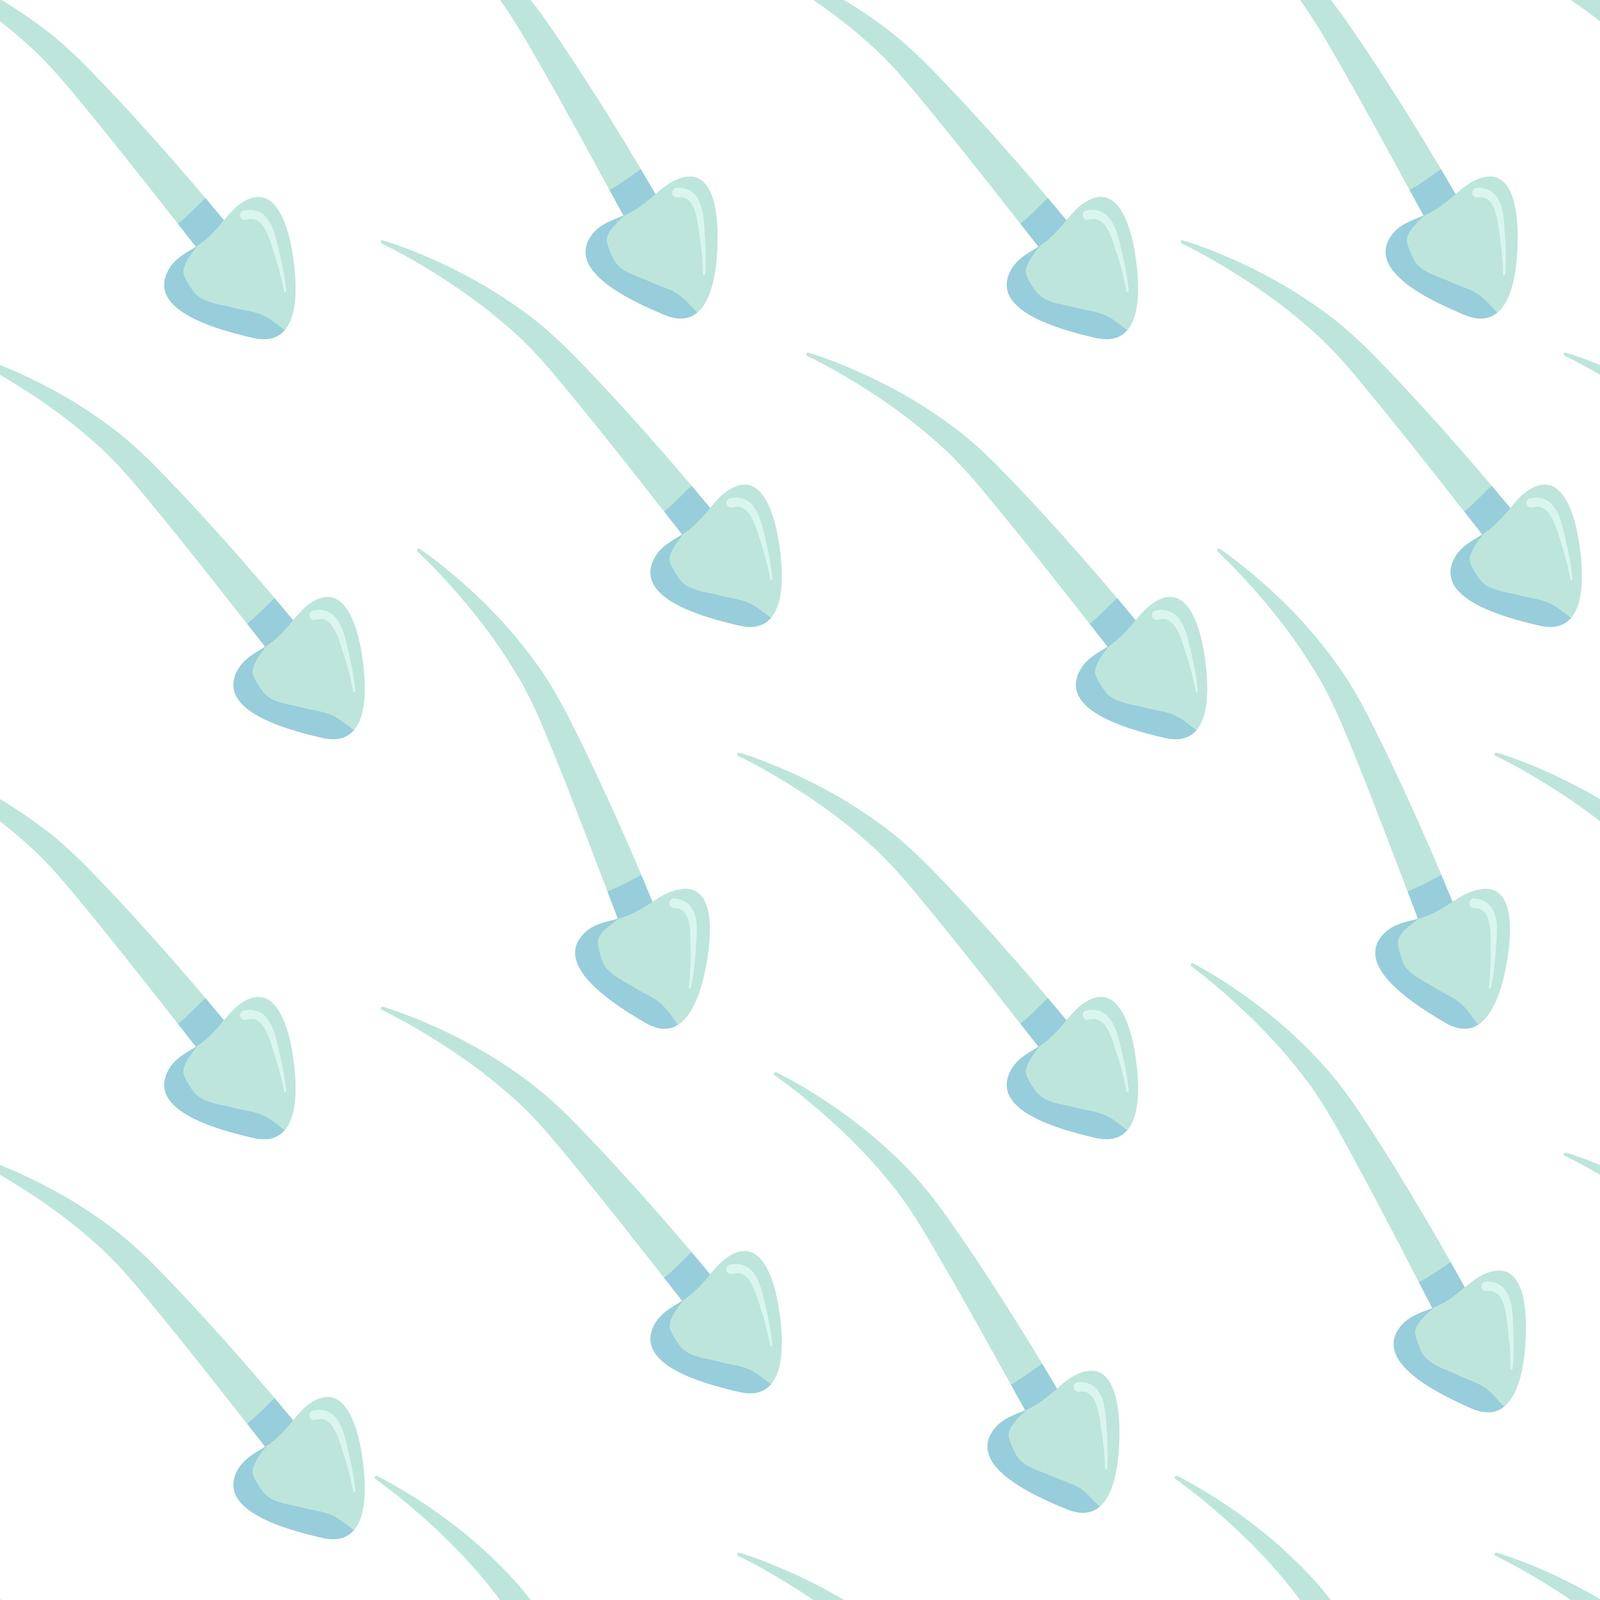 Sperm cells seamless pattern background. Semen vector illustration. Fertility concept by Daaridna